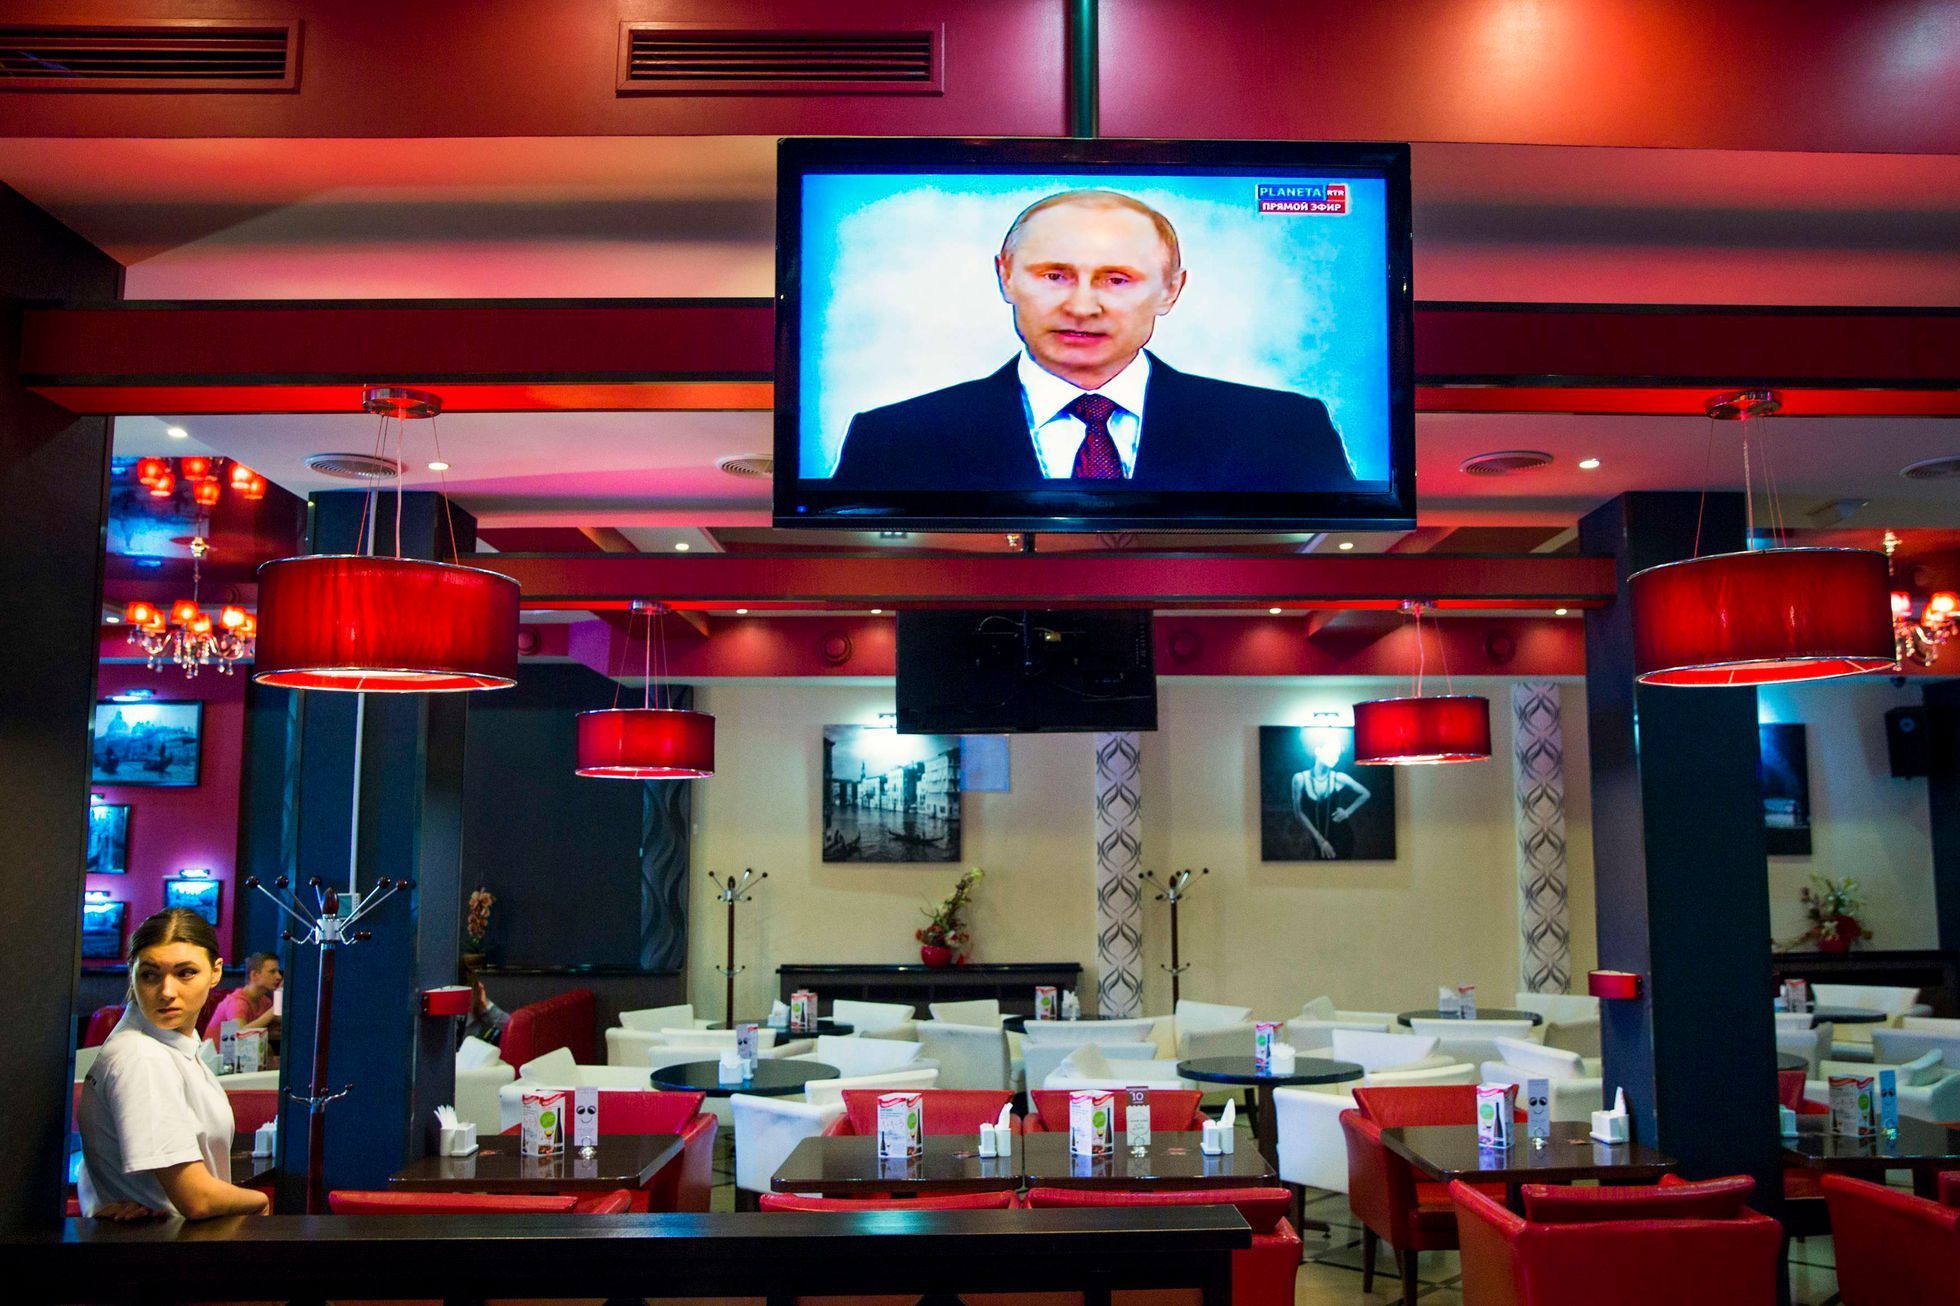 Obsluha pizzerie Simferopolu sleduje projev ruského prezidenta Vladimira Putina